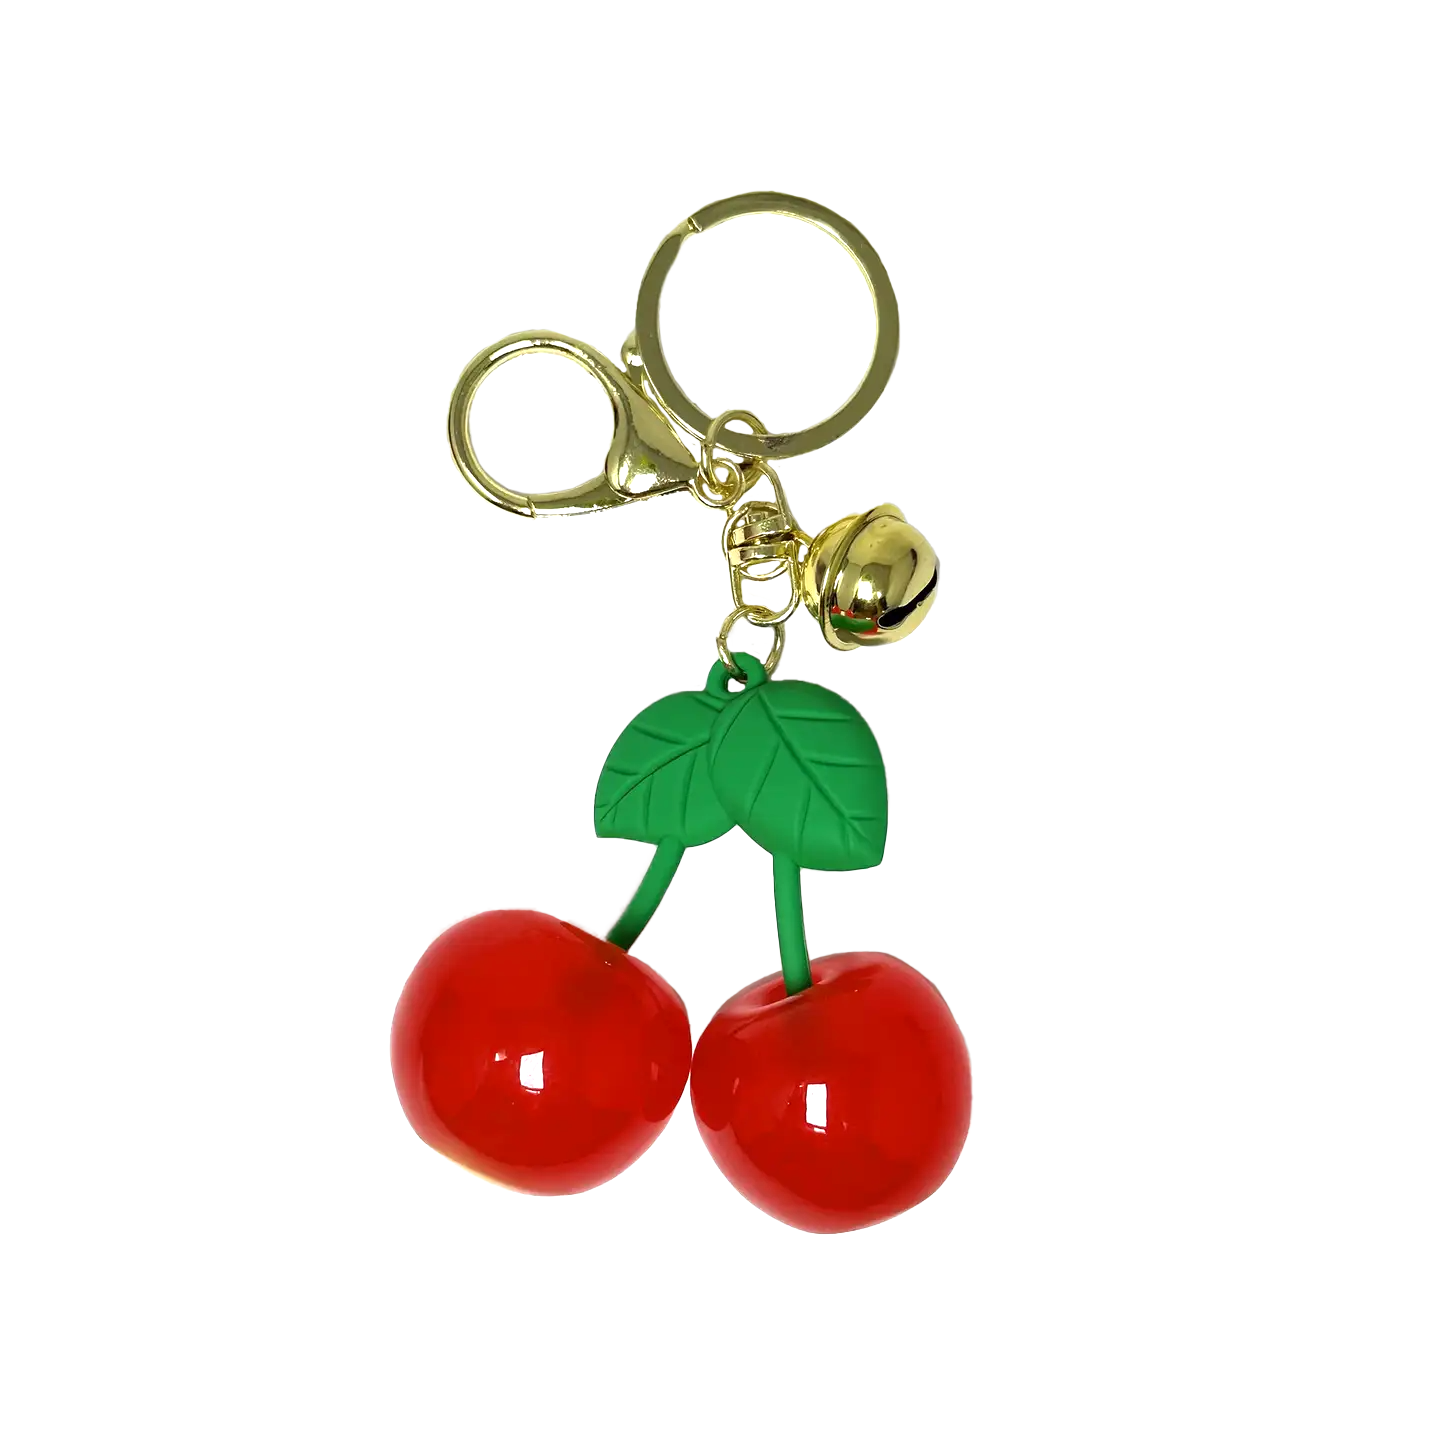 Charming Cherries Key Chain